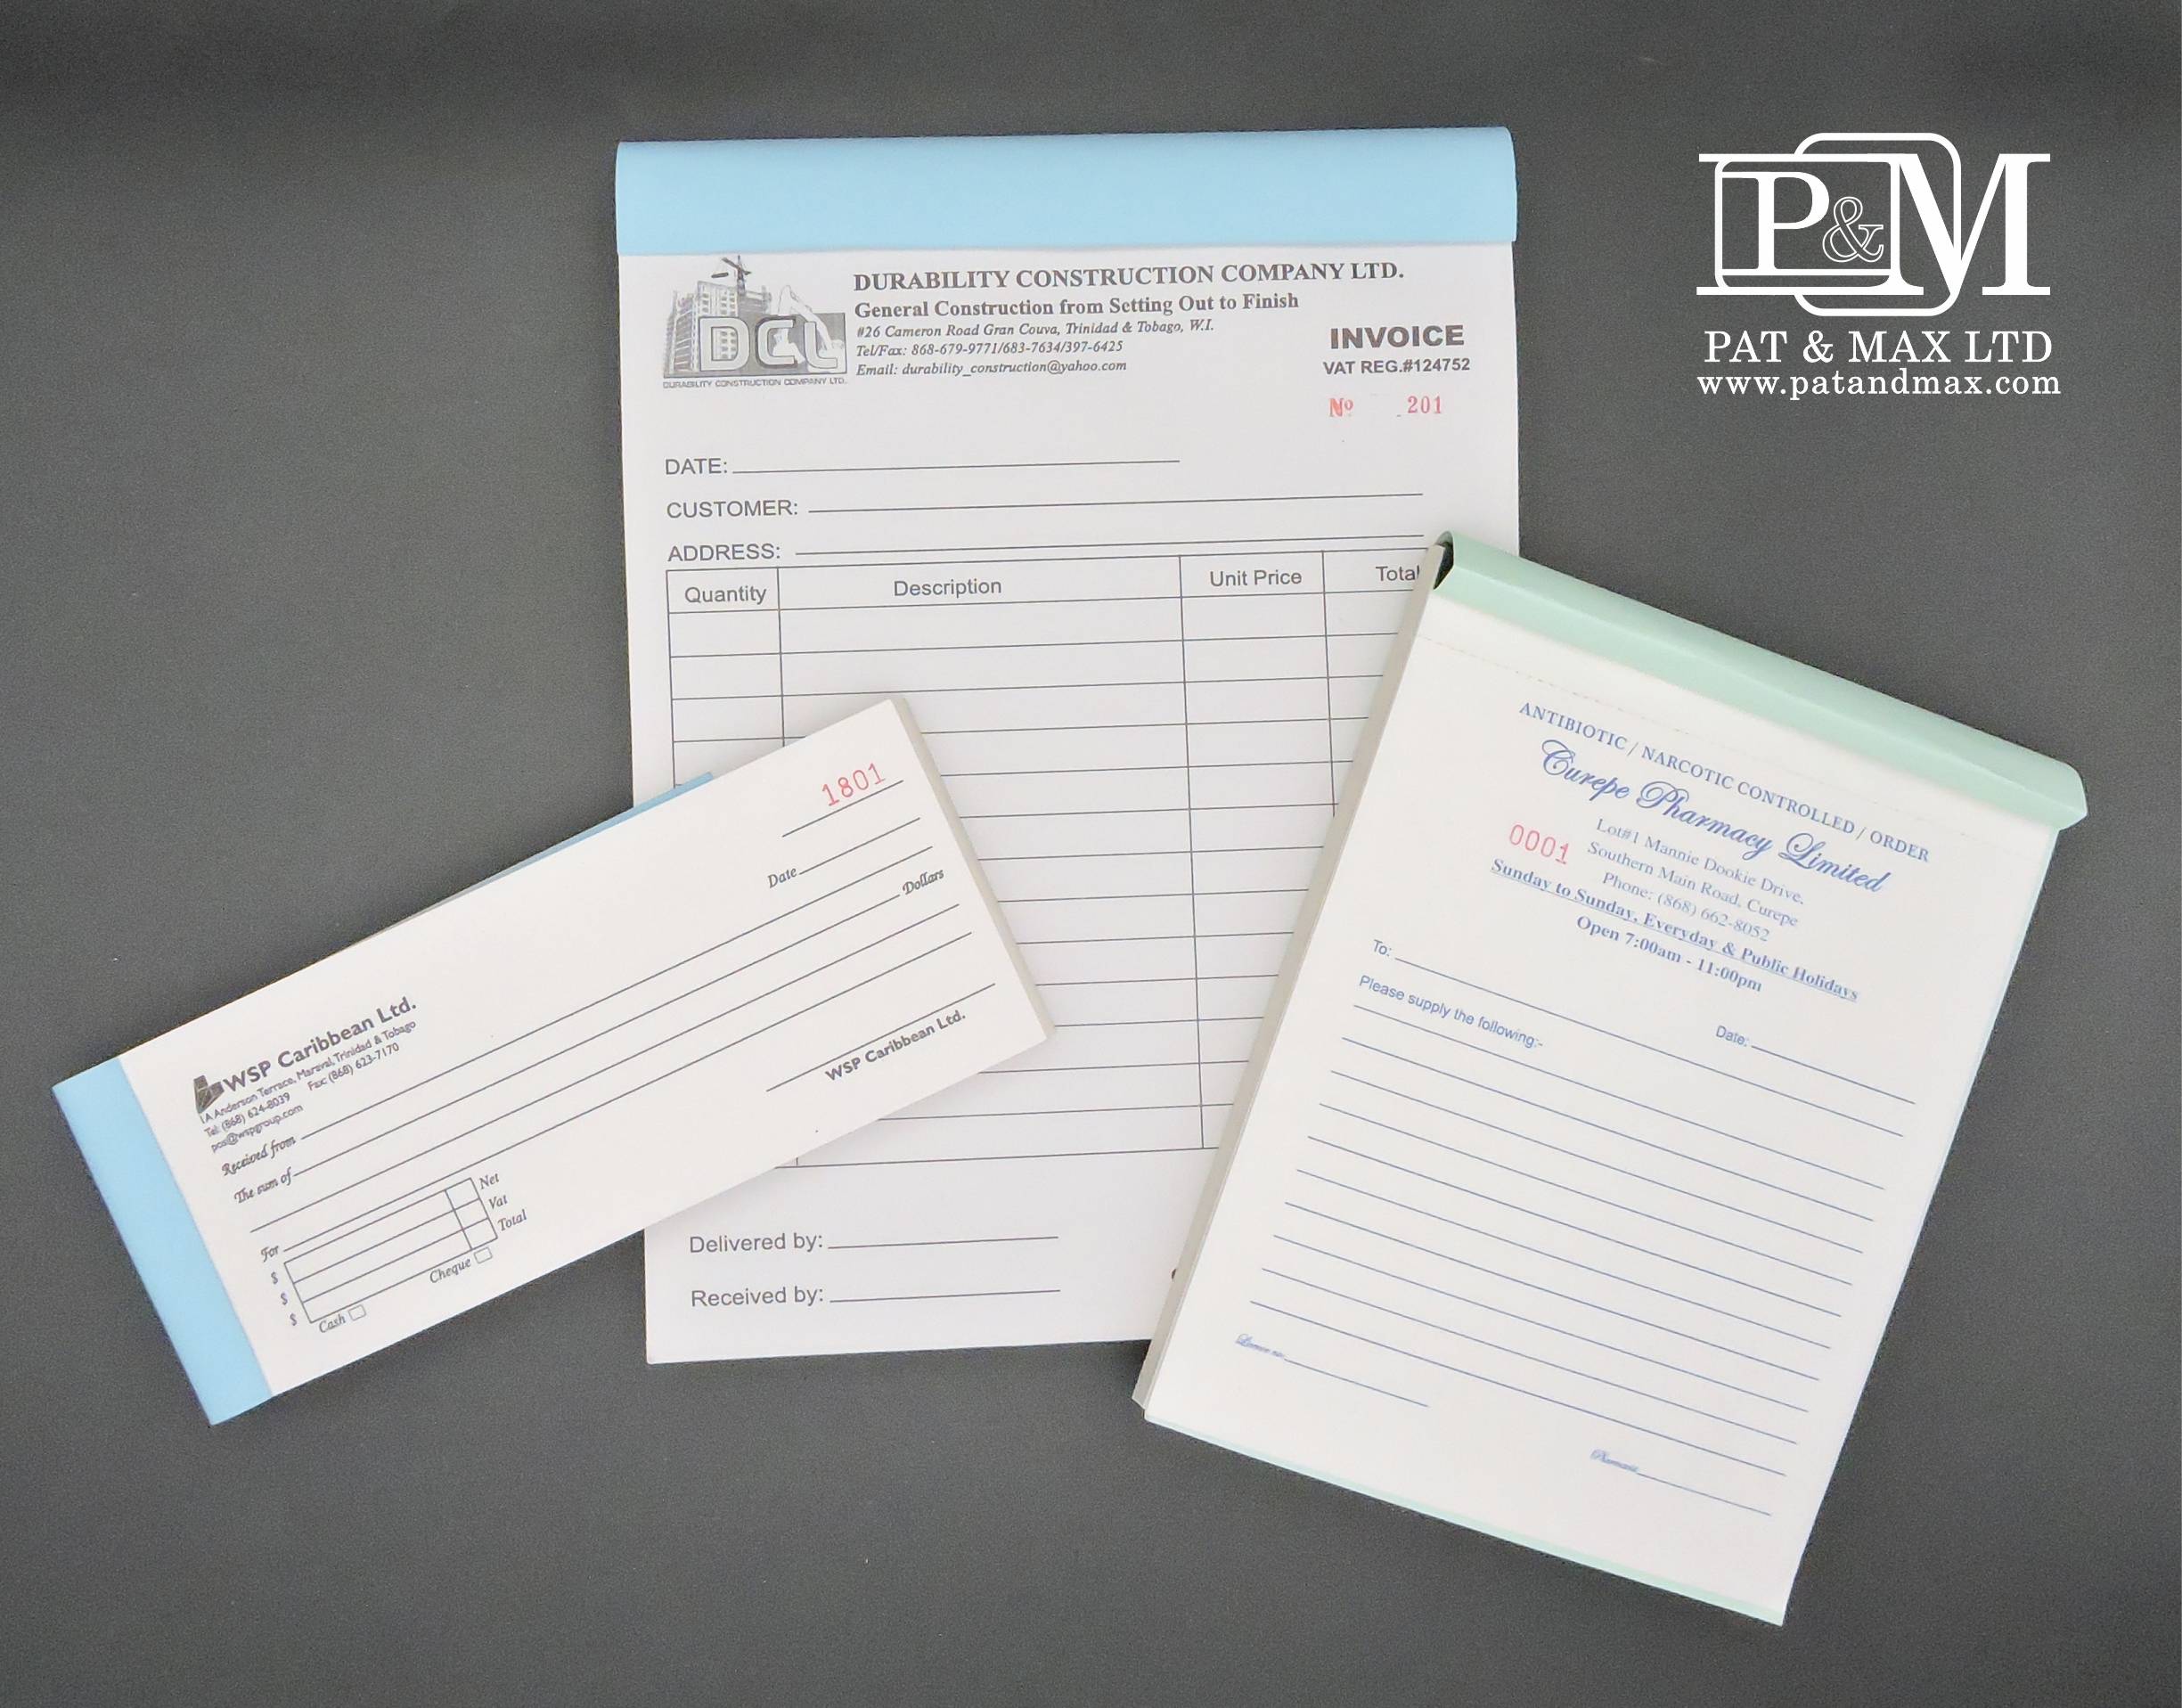 Pat & Max Ltd Plastic & ID Card Systems - PLASTICS-LAMINATING SERVICES & EQUIPMENT